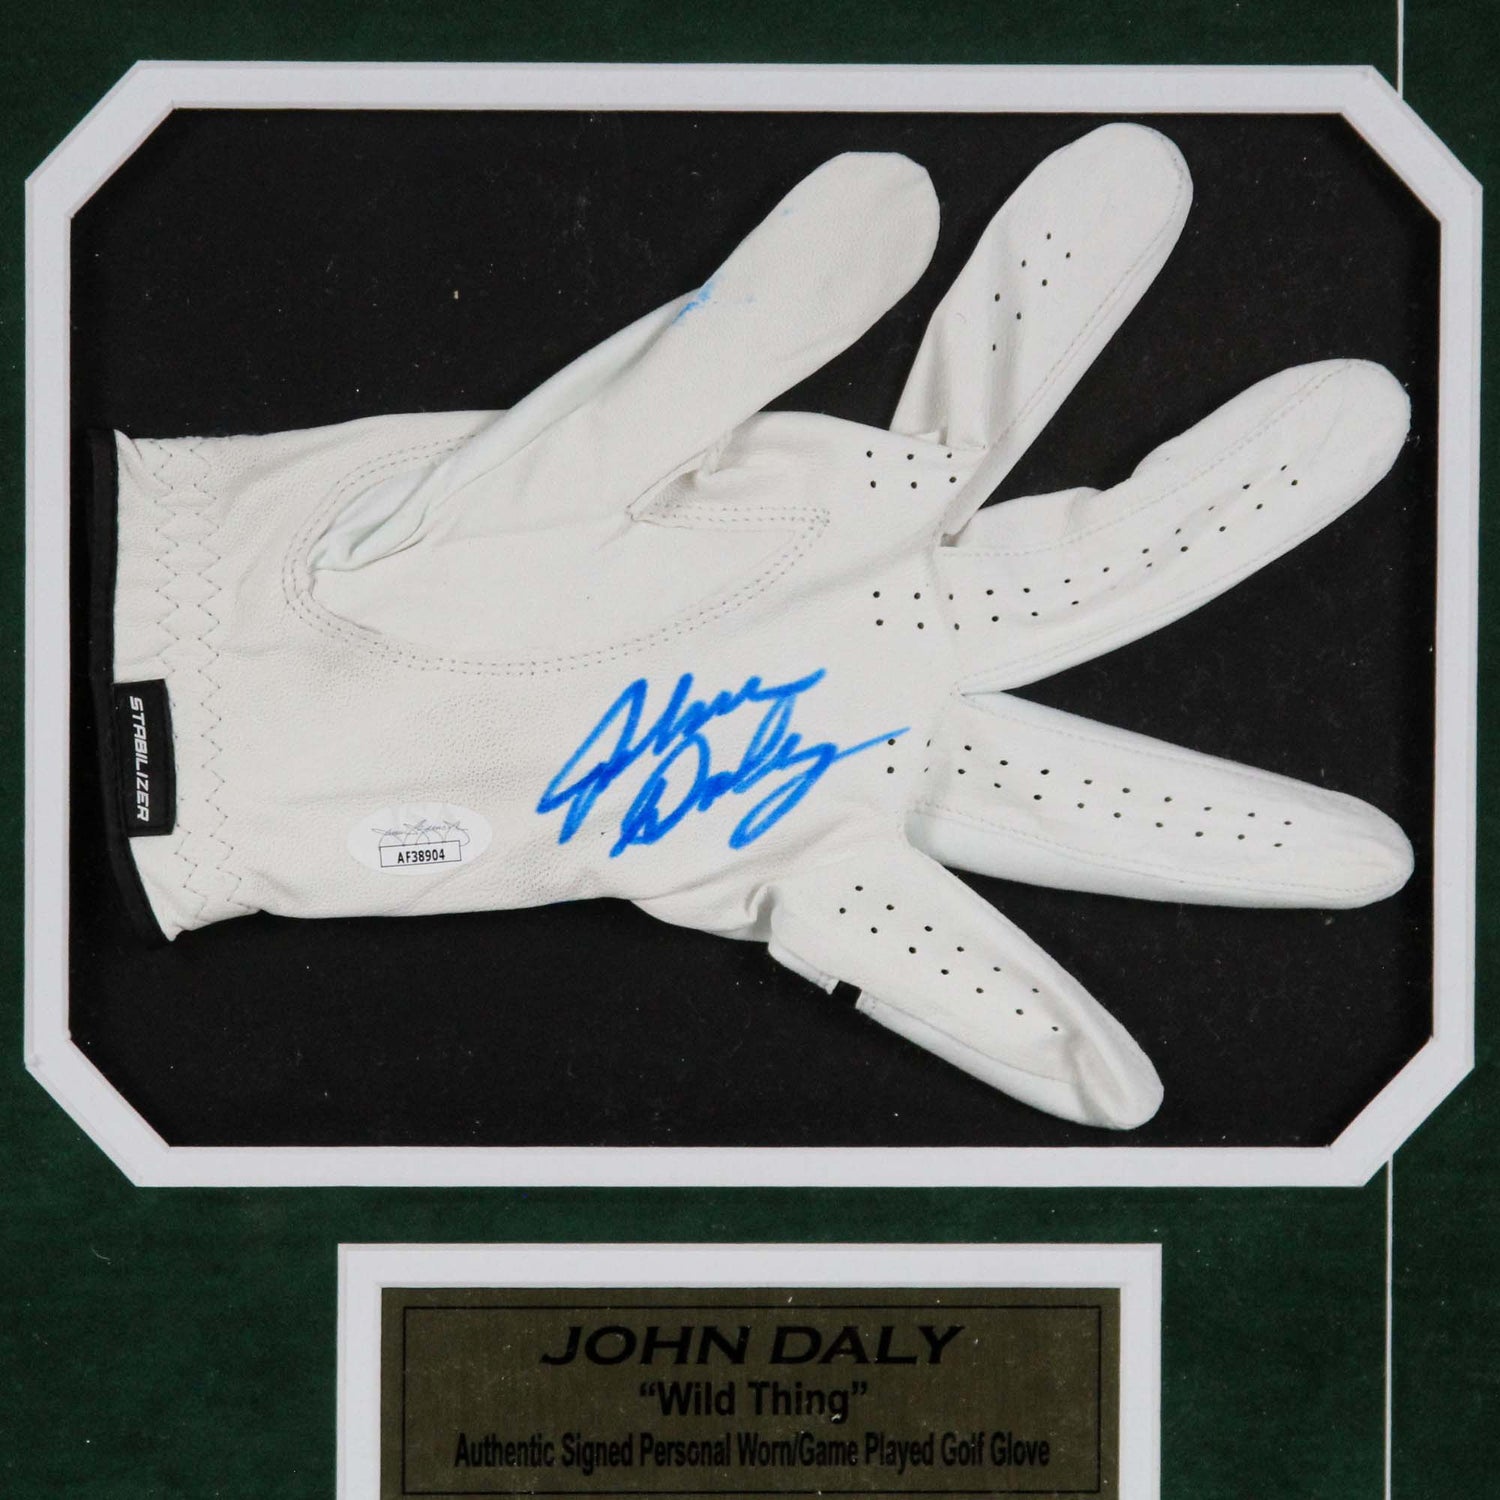 John Daly Signed Glove Memorabilia Autograph